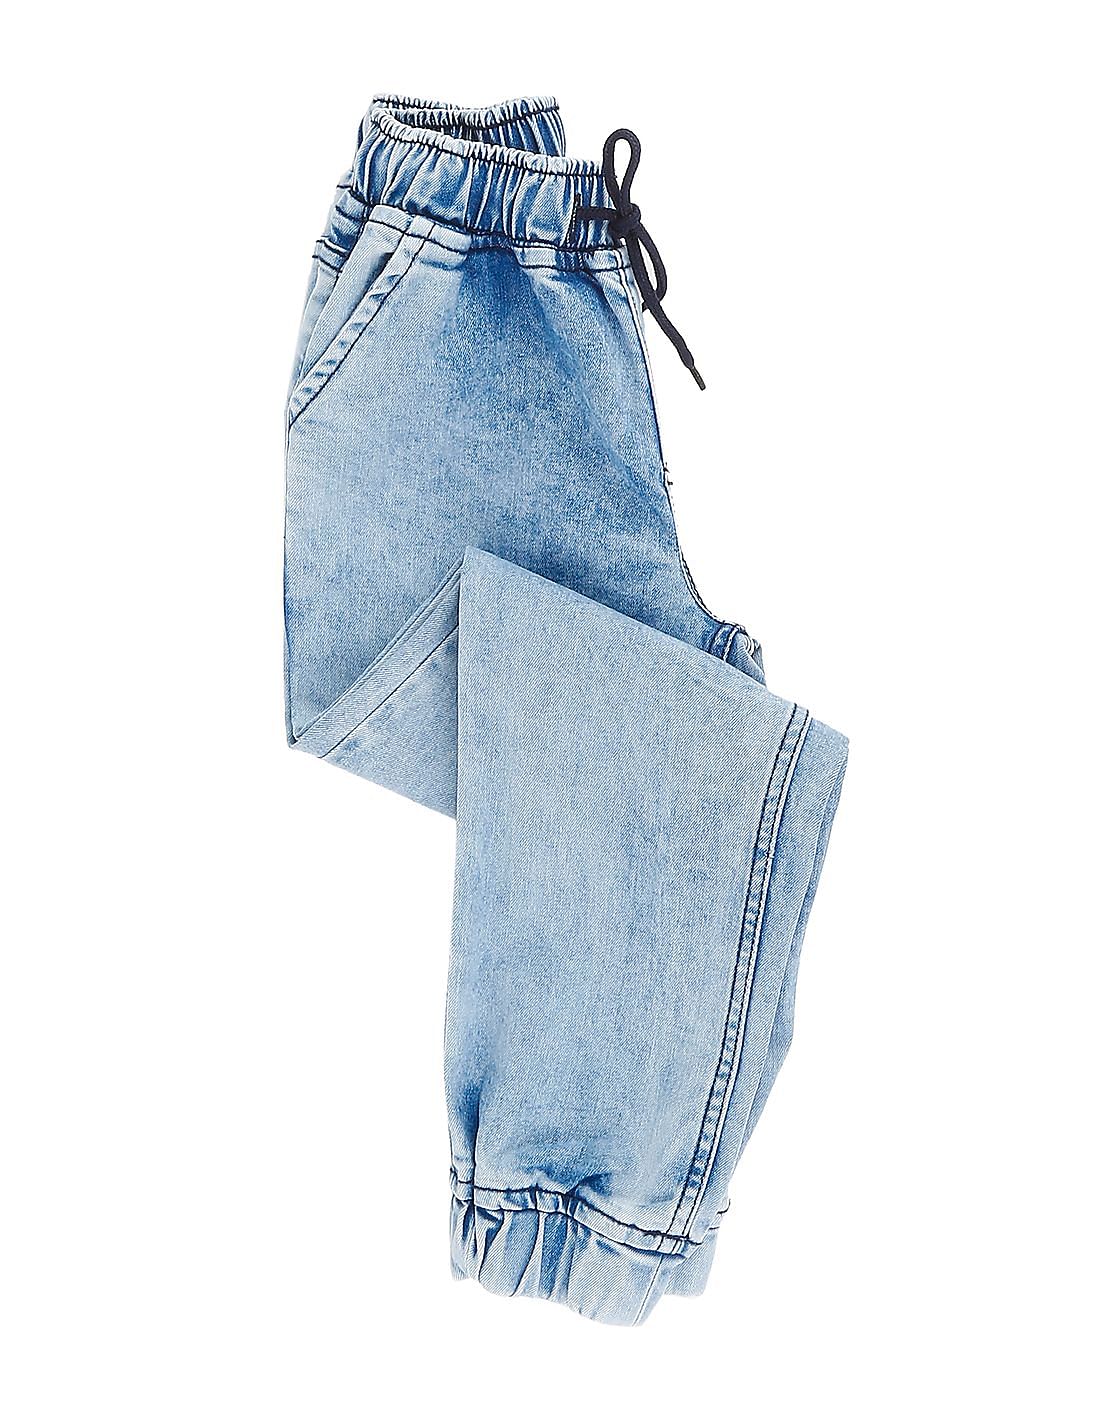 jogger jeans for girl